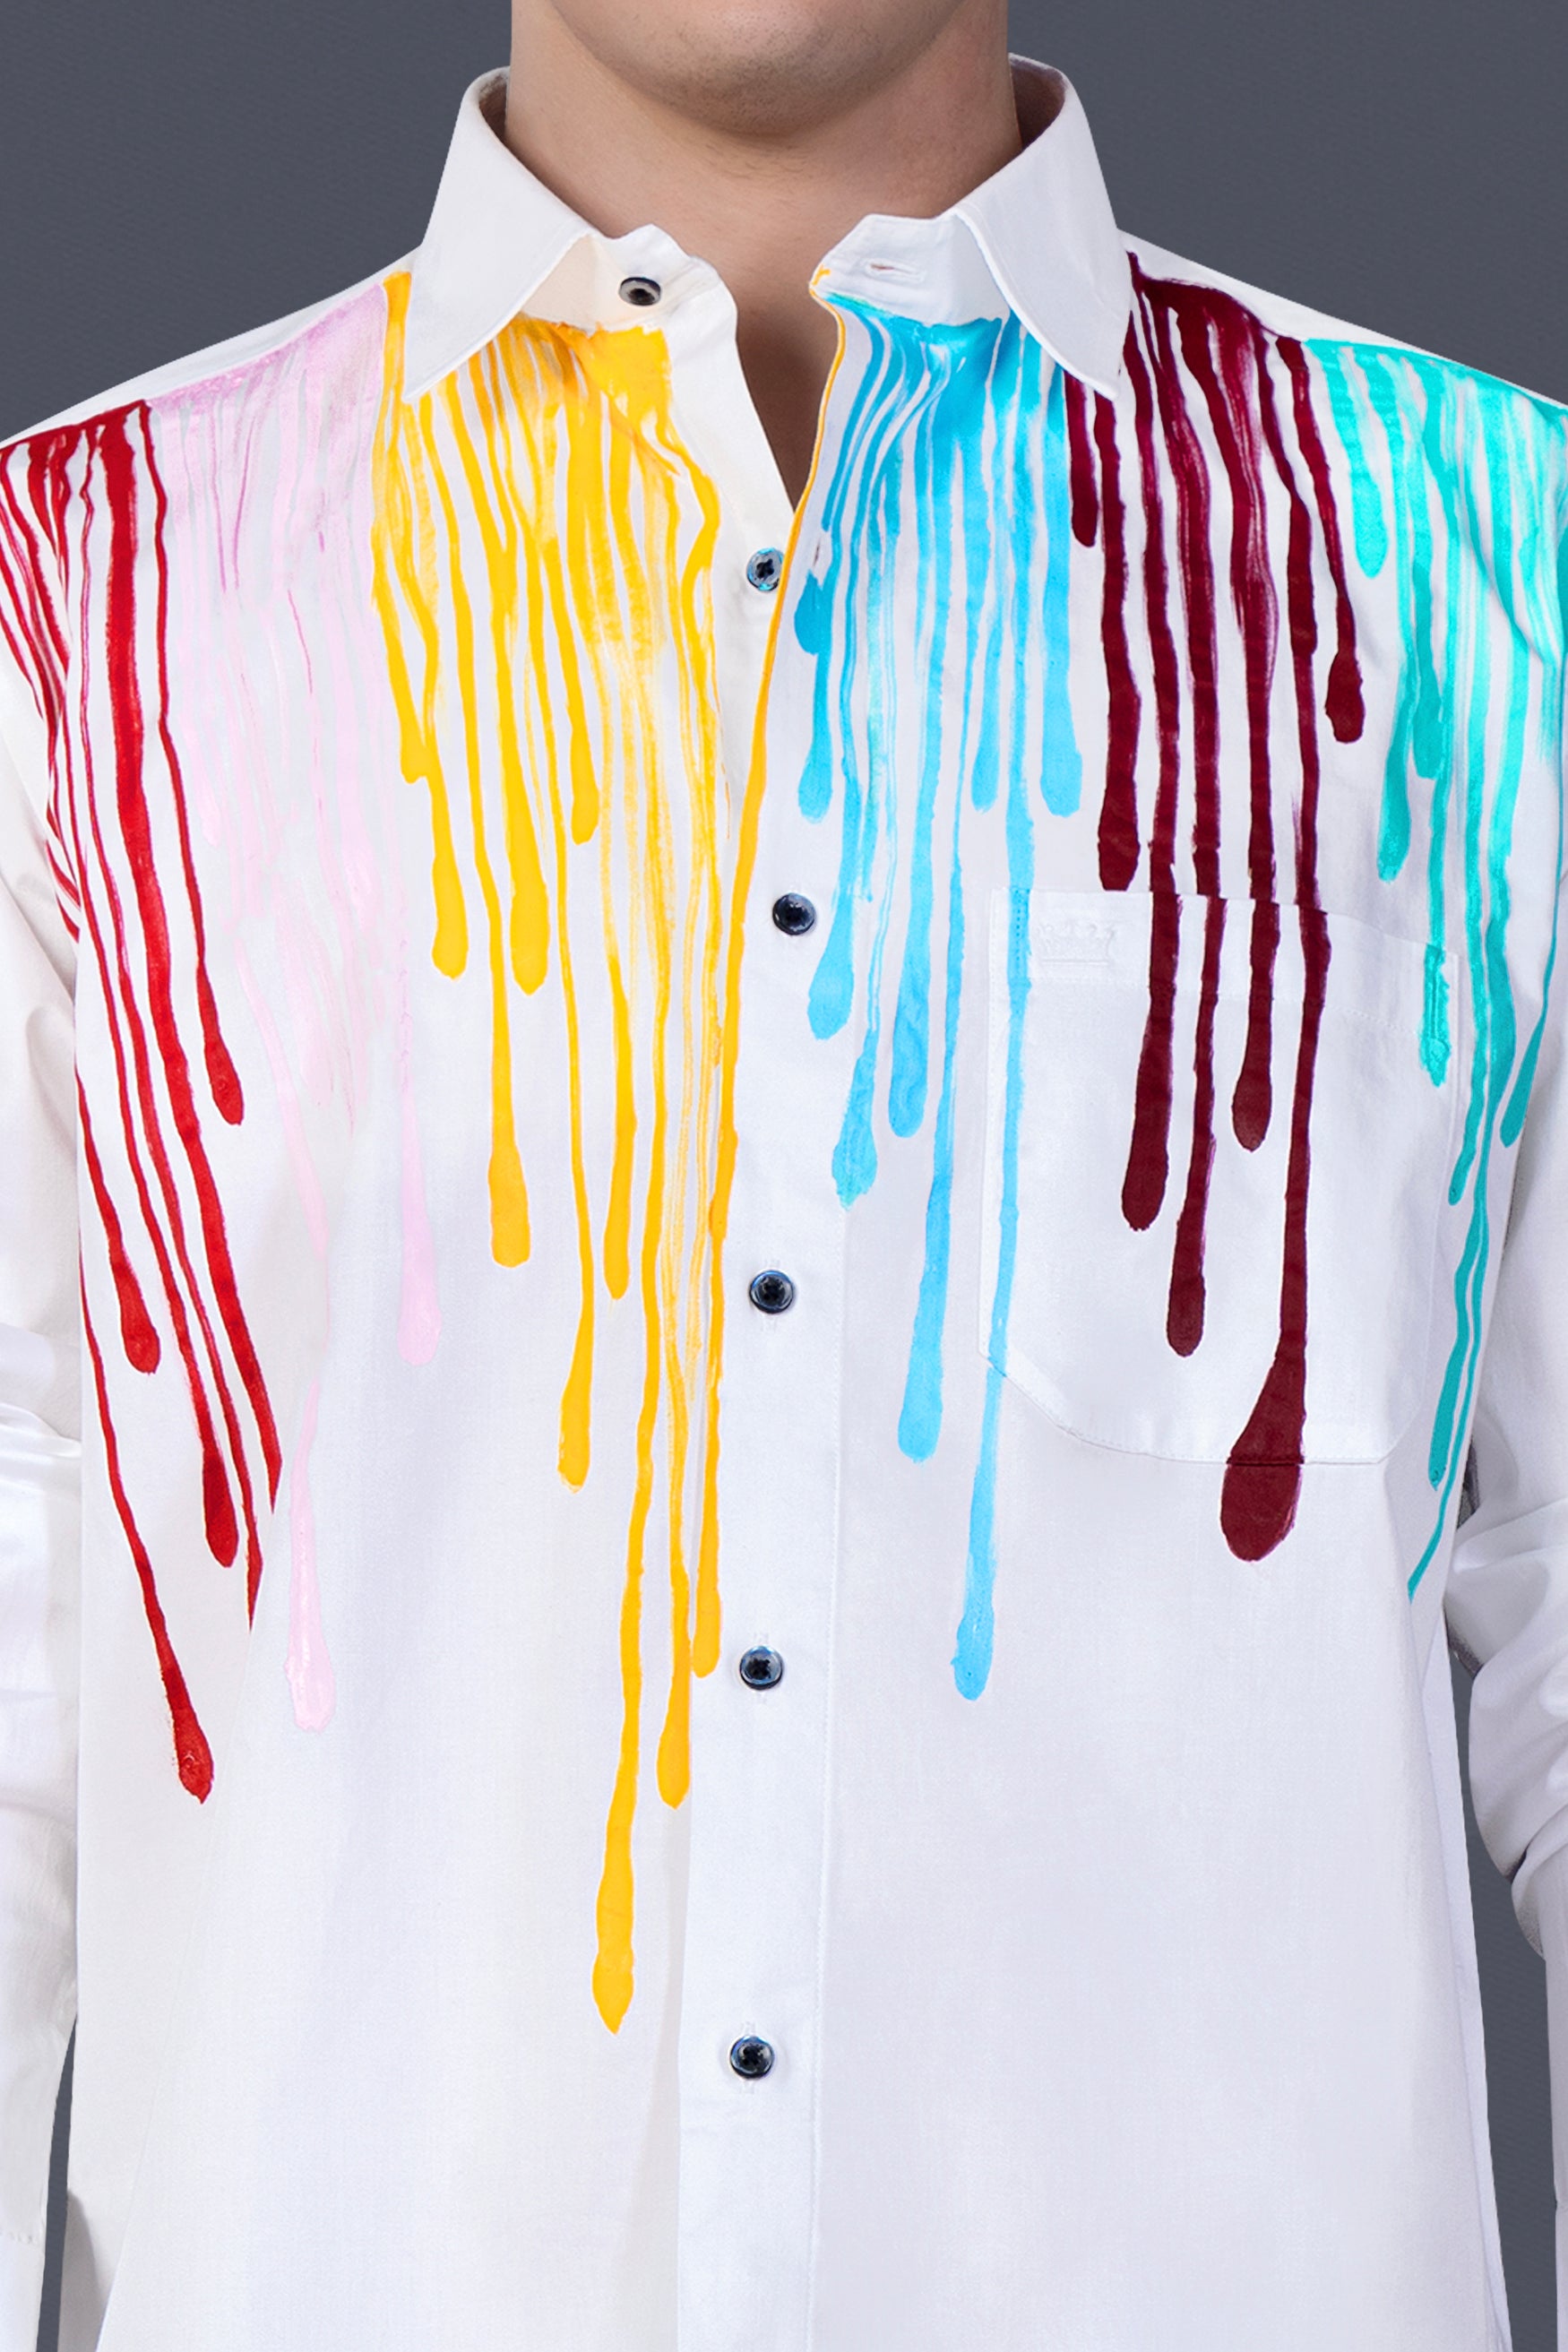 Bright White Melting Color Effect Hand Painted Subtle Sheen Super Soft Premium Cotton Designer Shirt